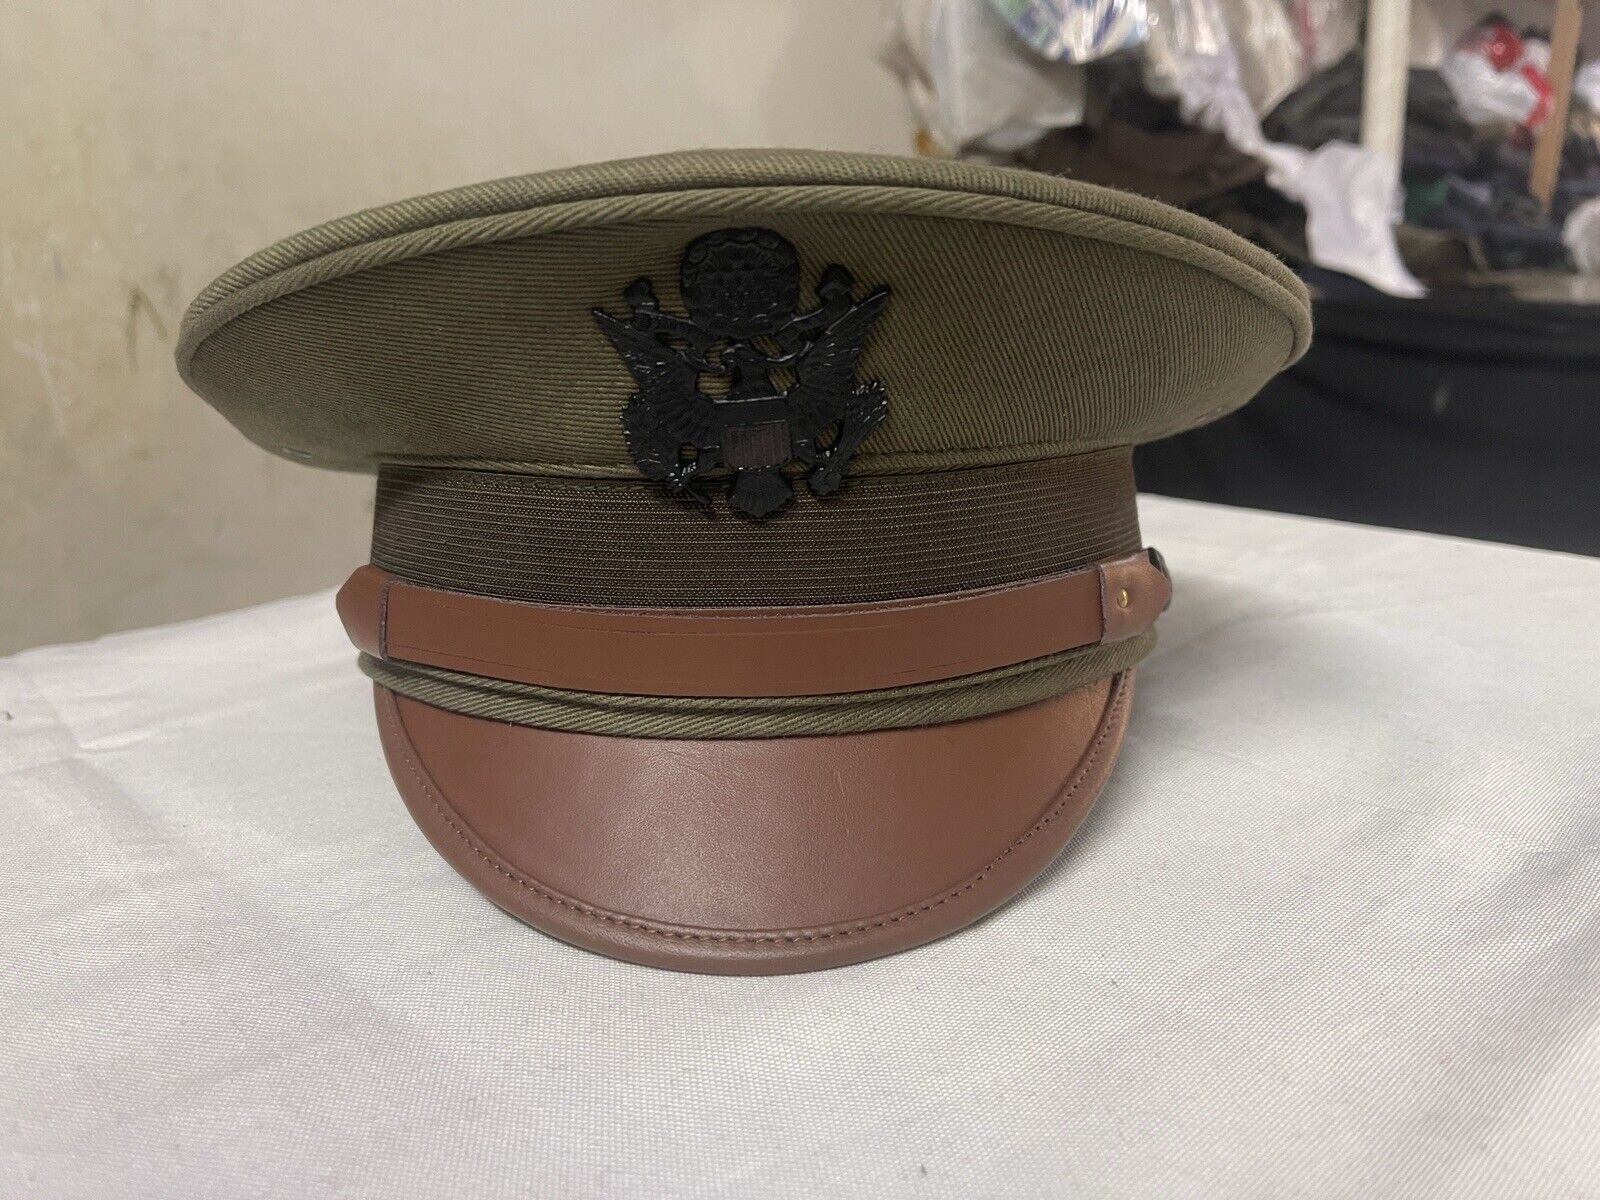 M1912 US Army officers visor cap.